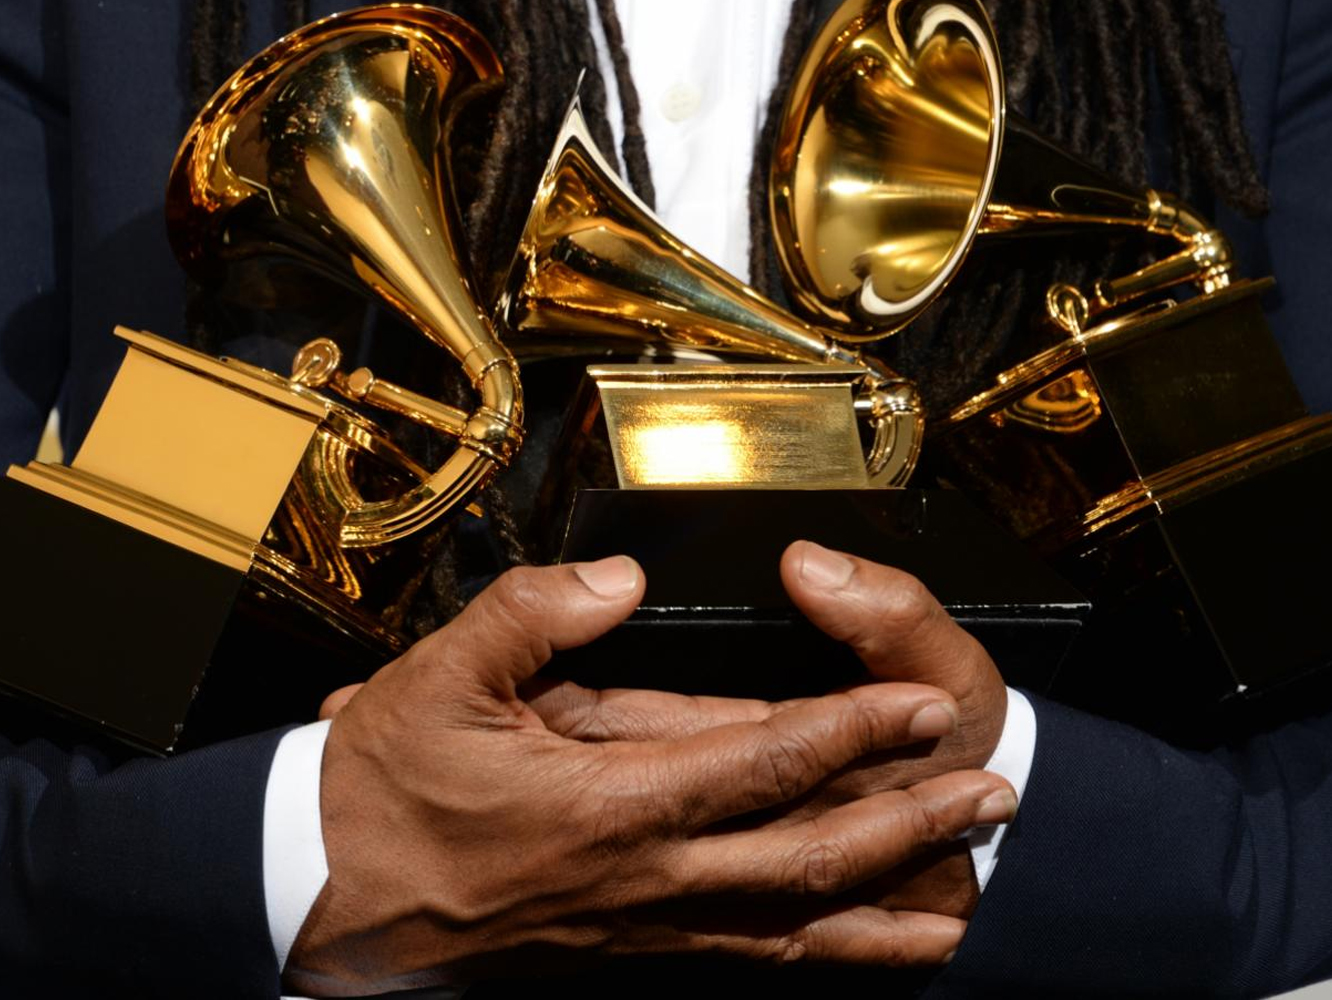  Démonos un momento para comentar cómo el Grammy racista pasó a ser… otro tipo de Grammy racista